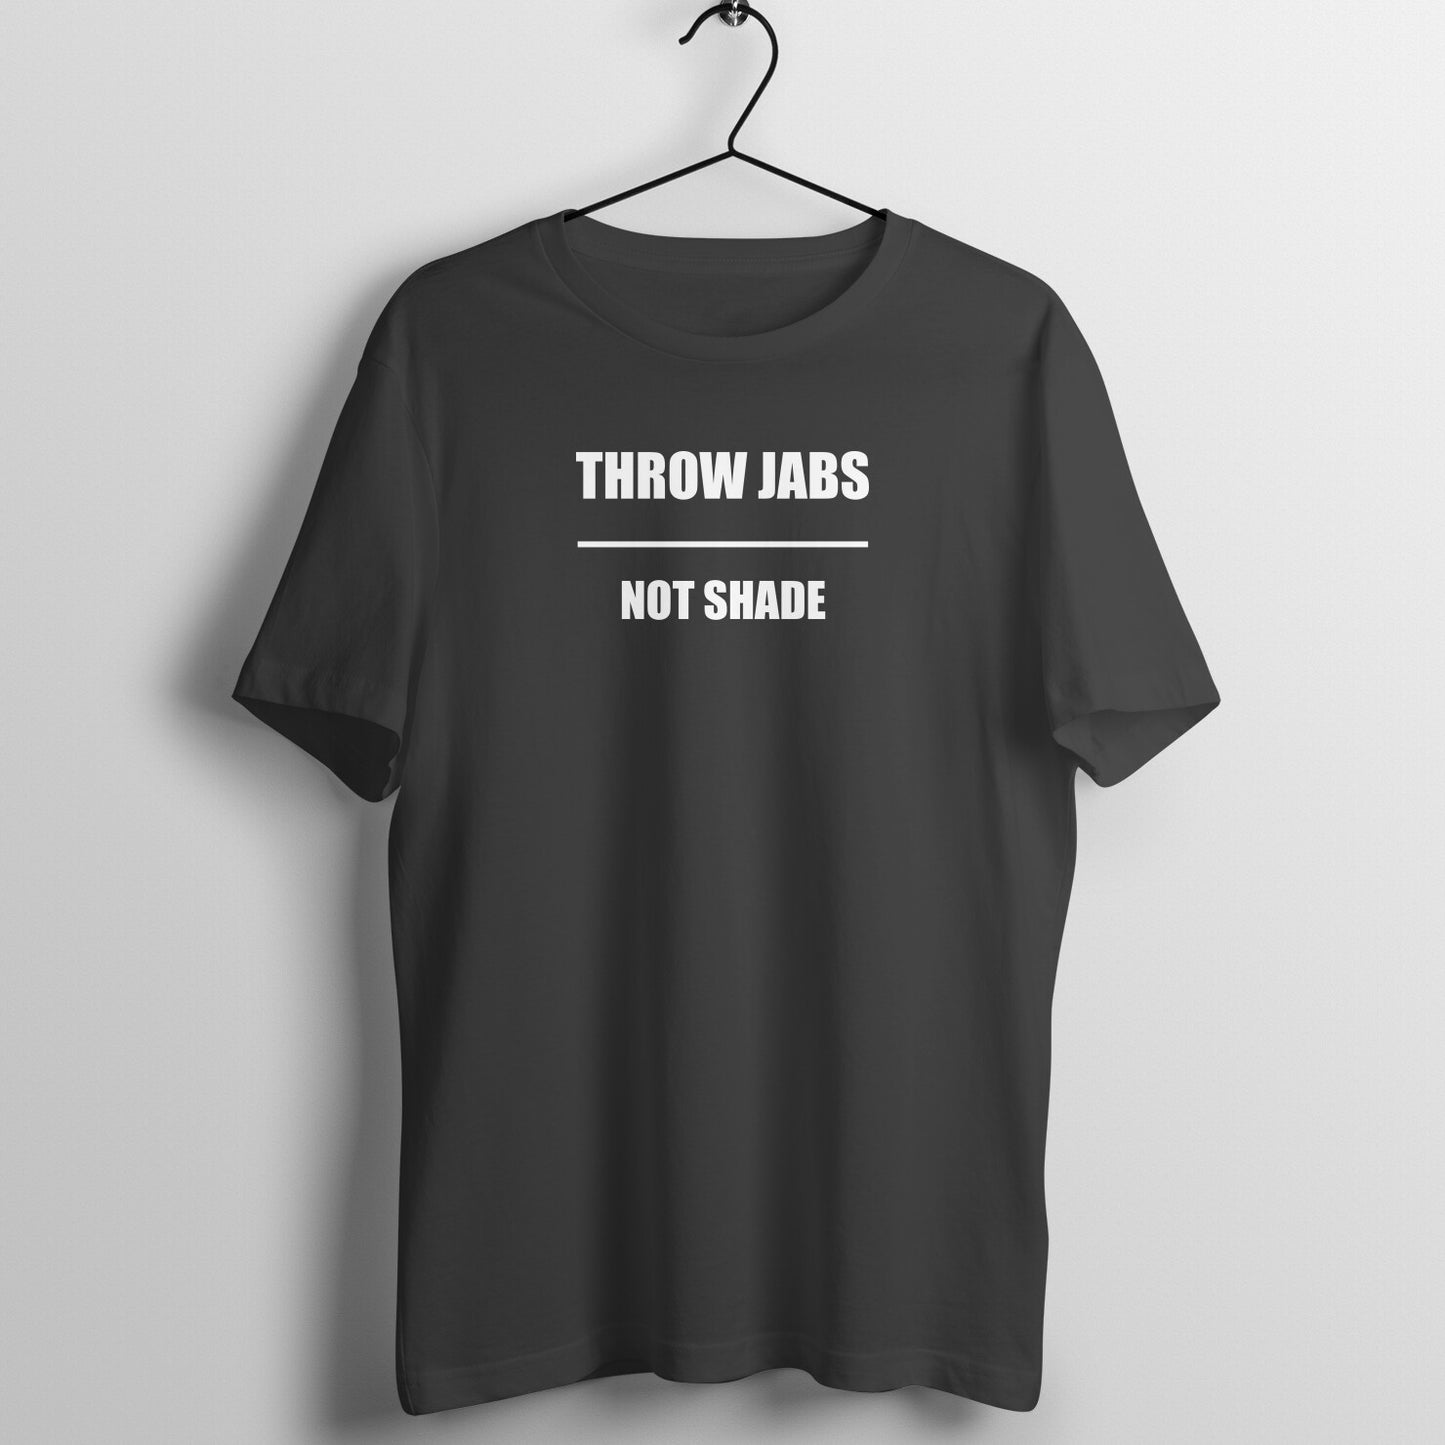 THROW JABS NOT SHADE. Boxing T-shirt